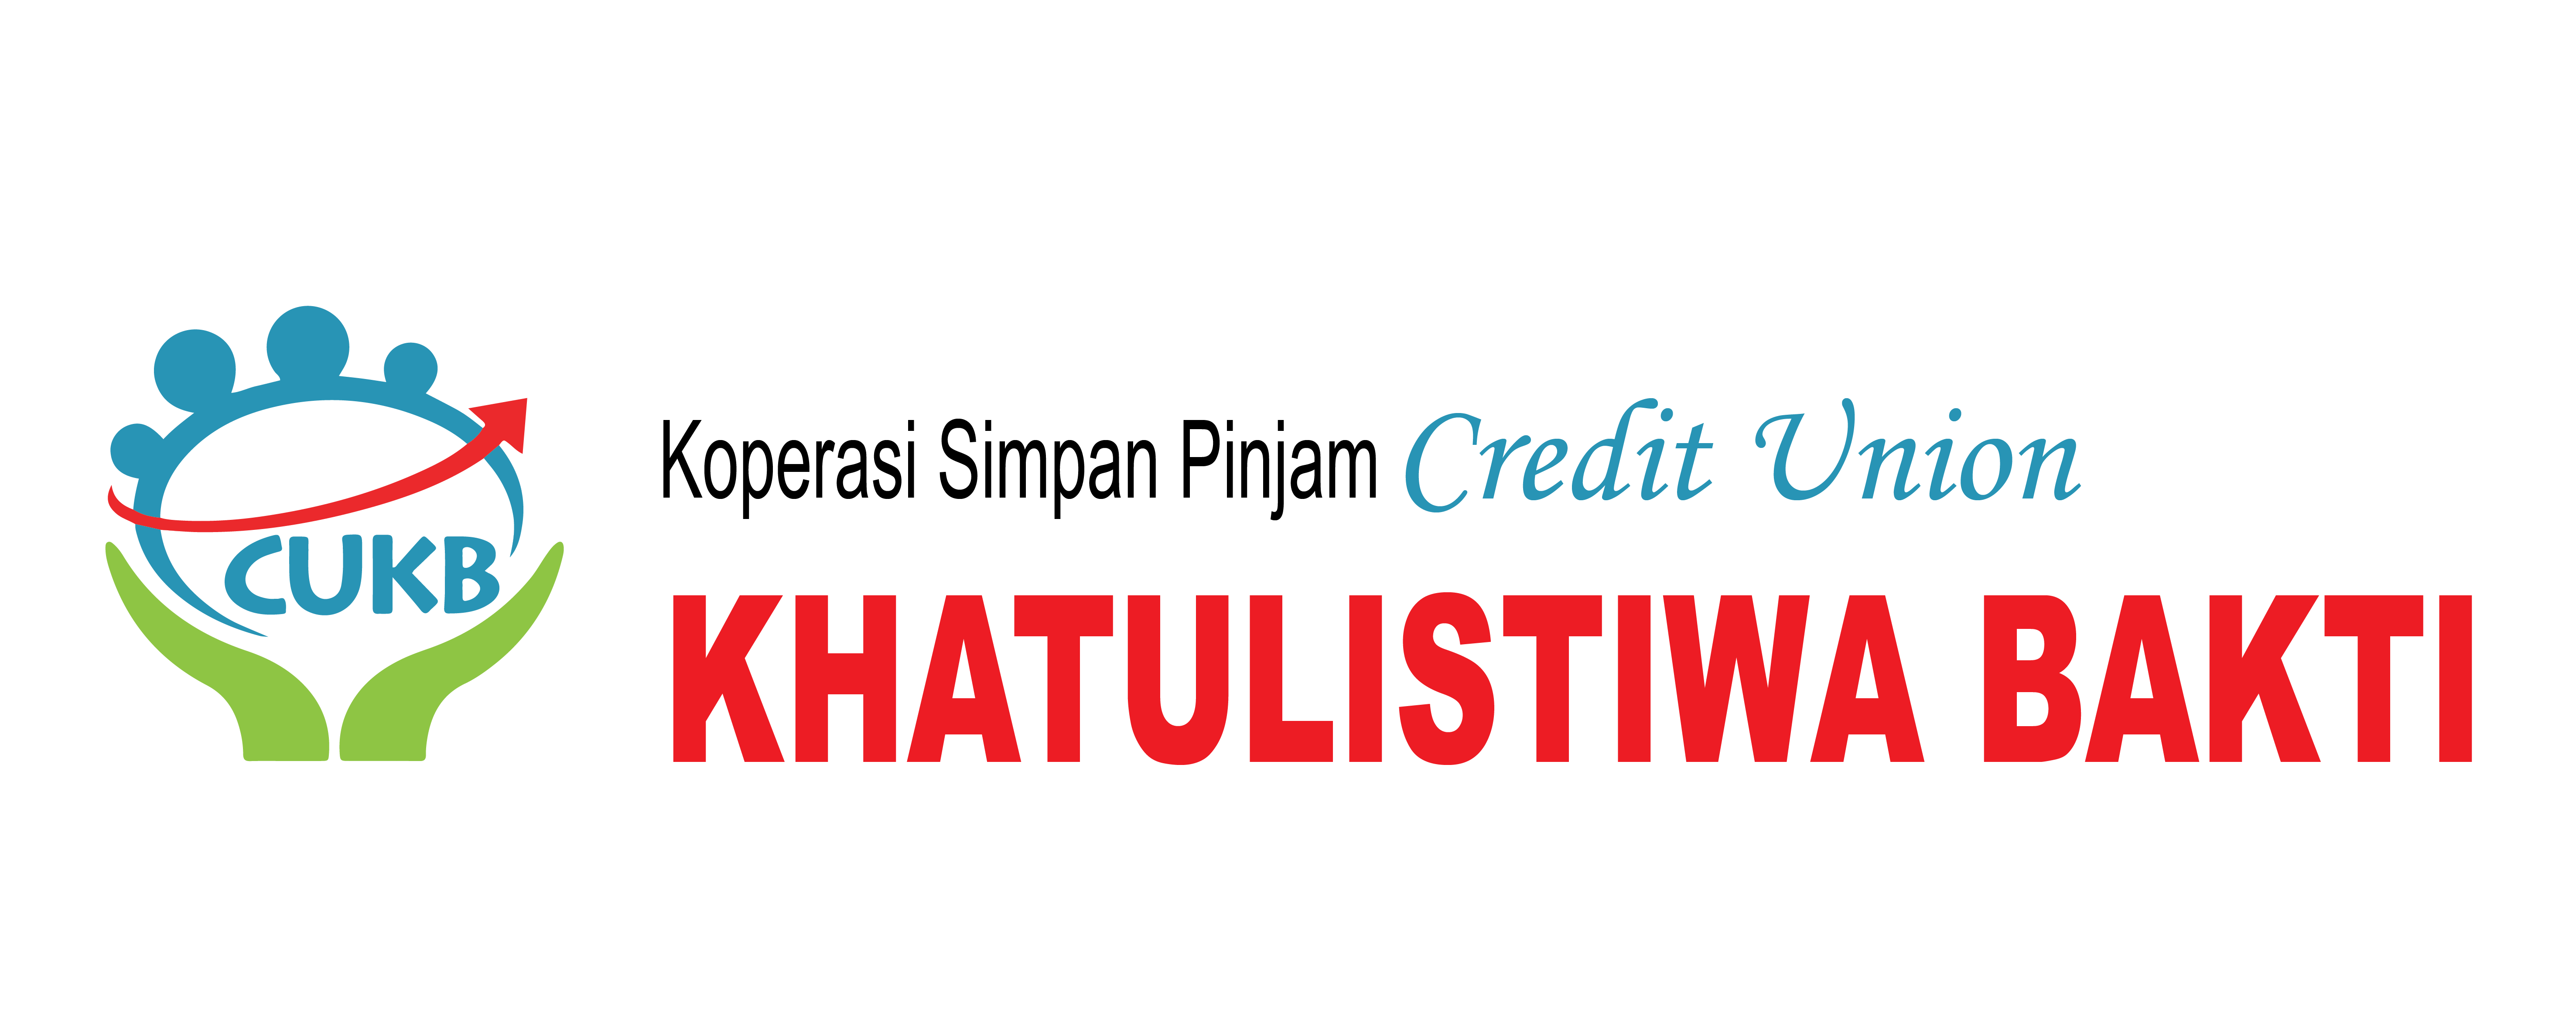 Credit Union Khatulistiwa Bakti